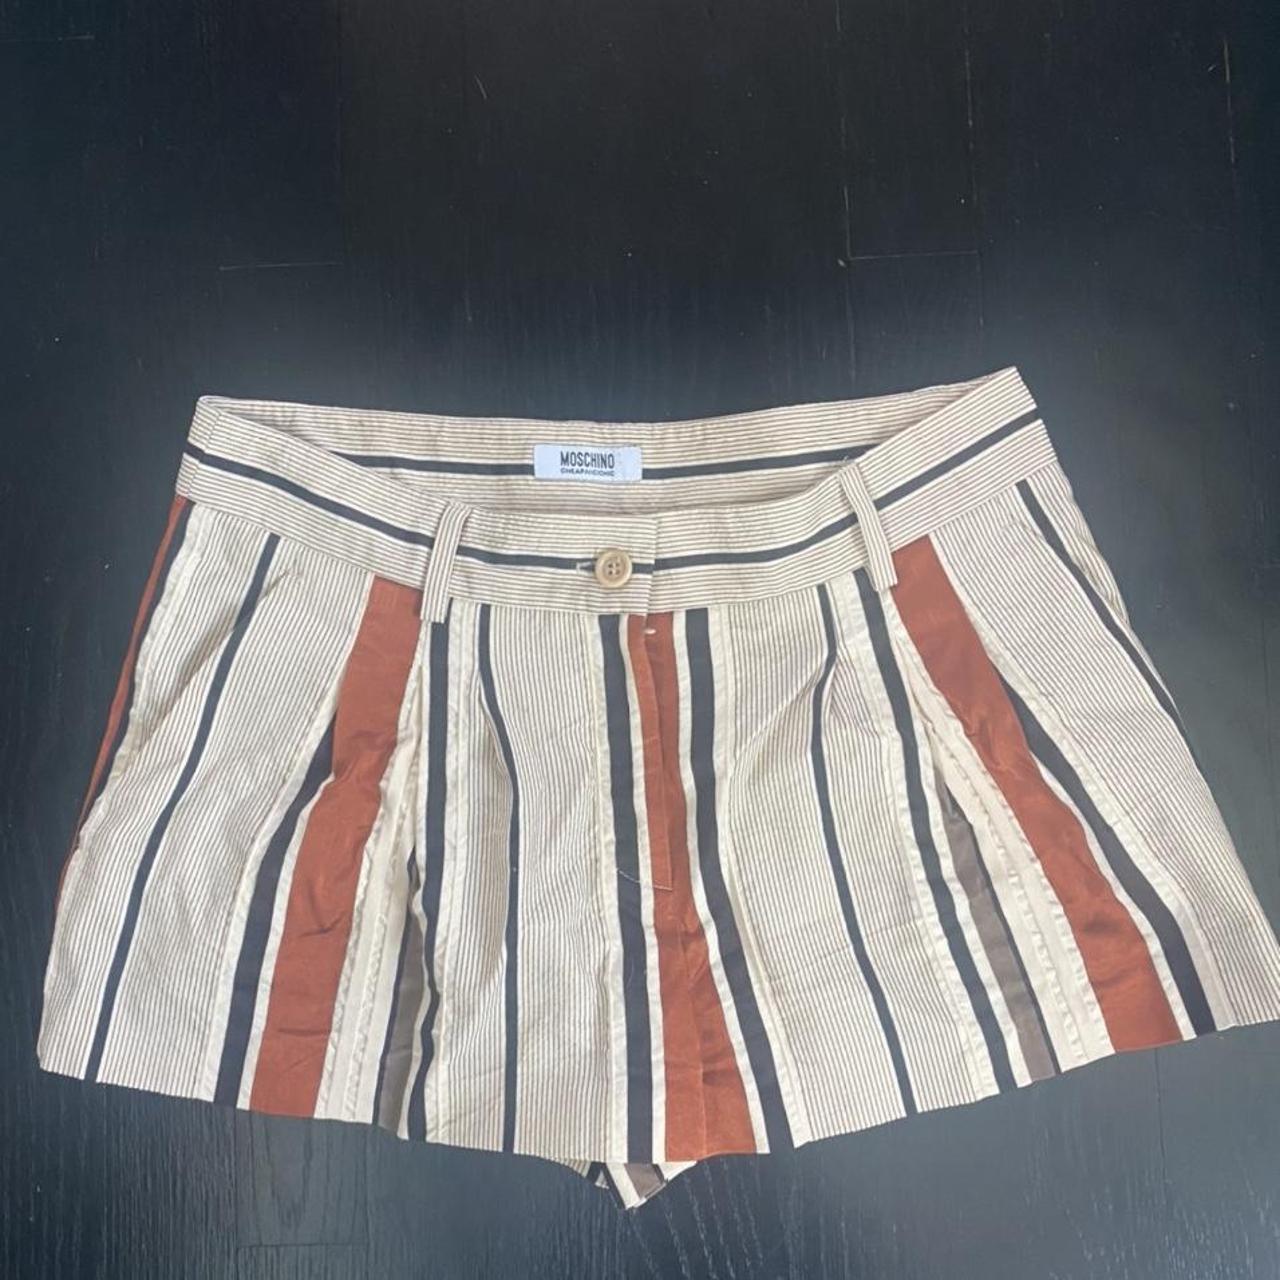 Moschino Cheap & Chic Women's Tan and Orange Shorts